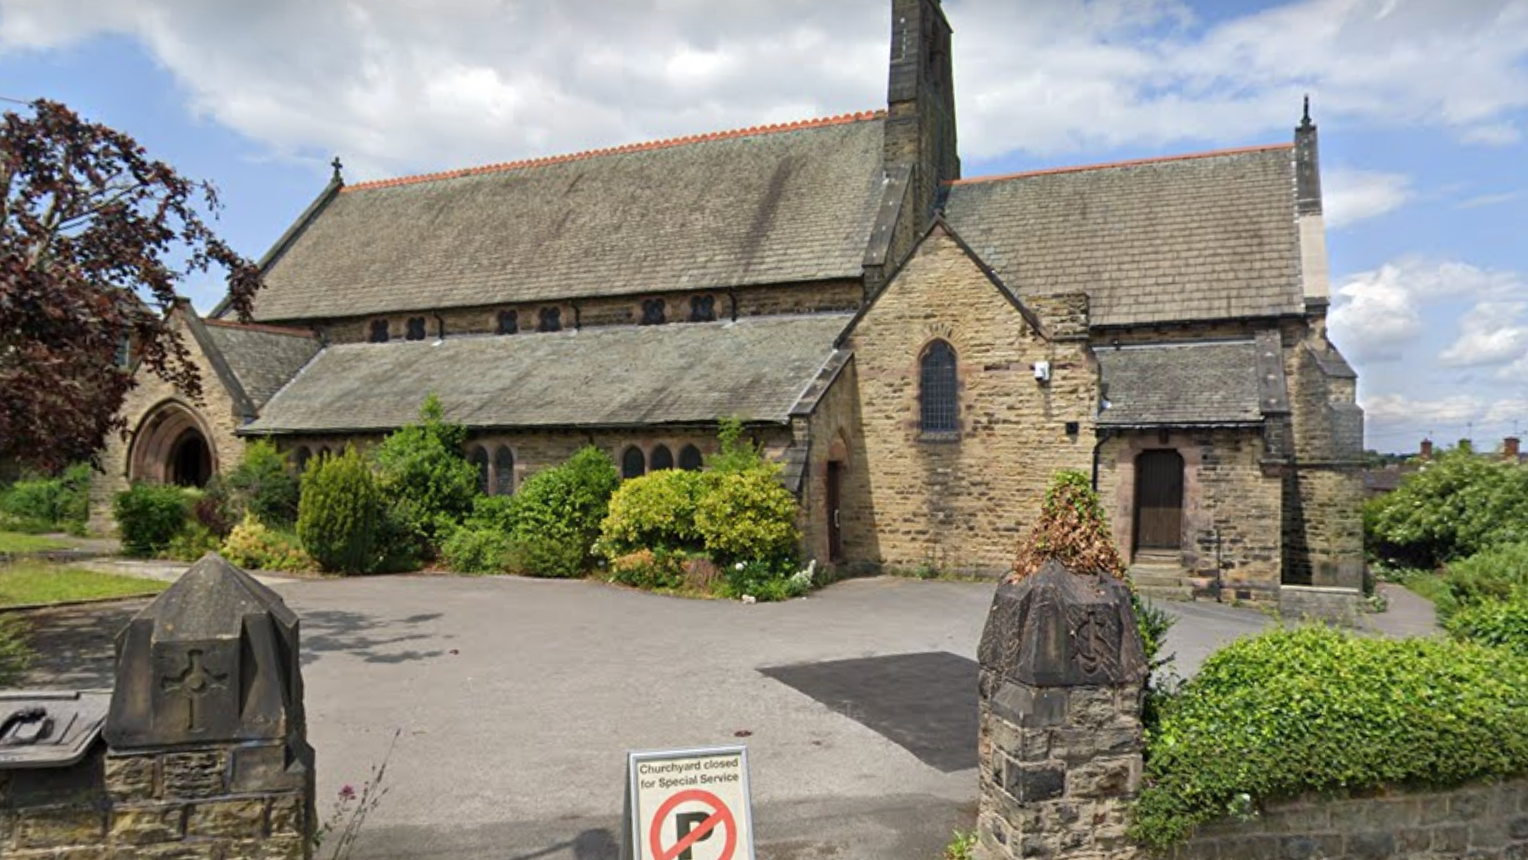 The church has suffered six burglaries in the last year